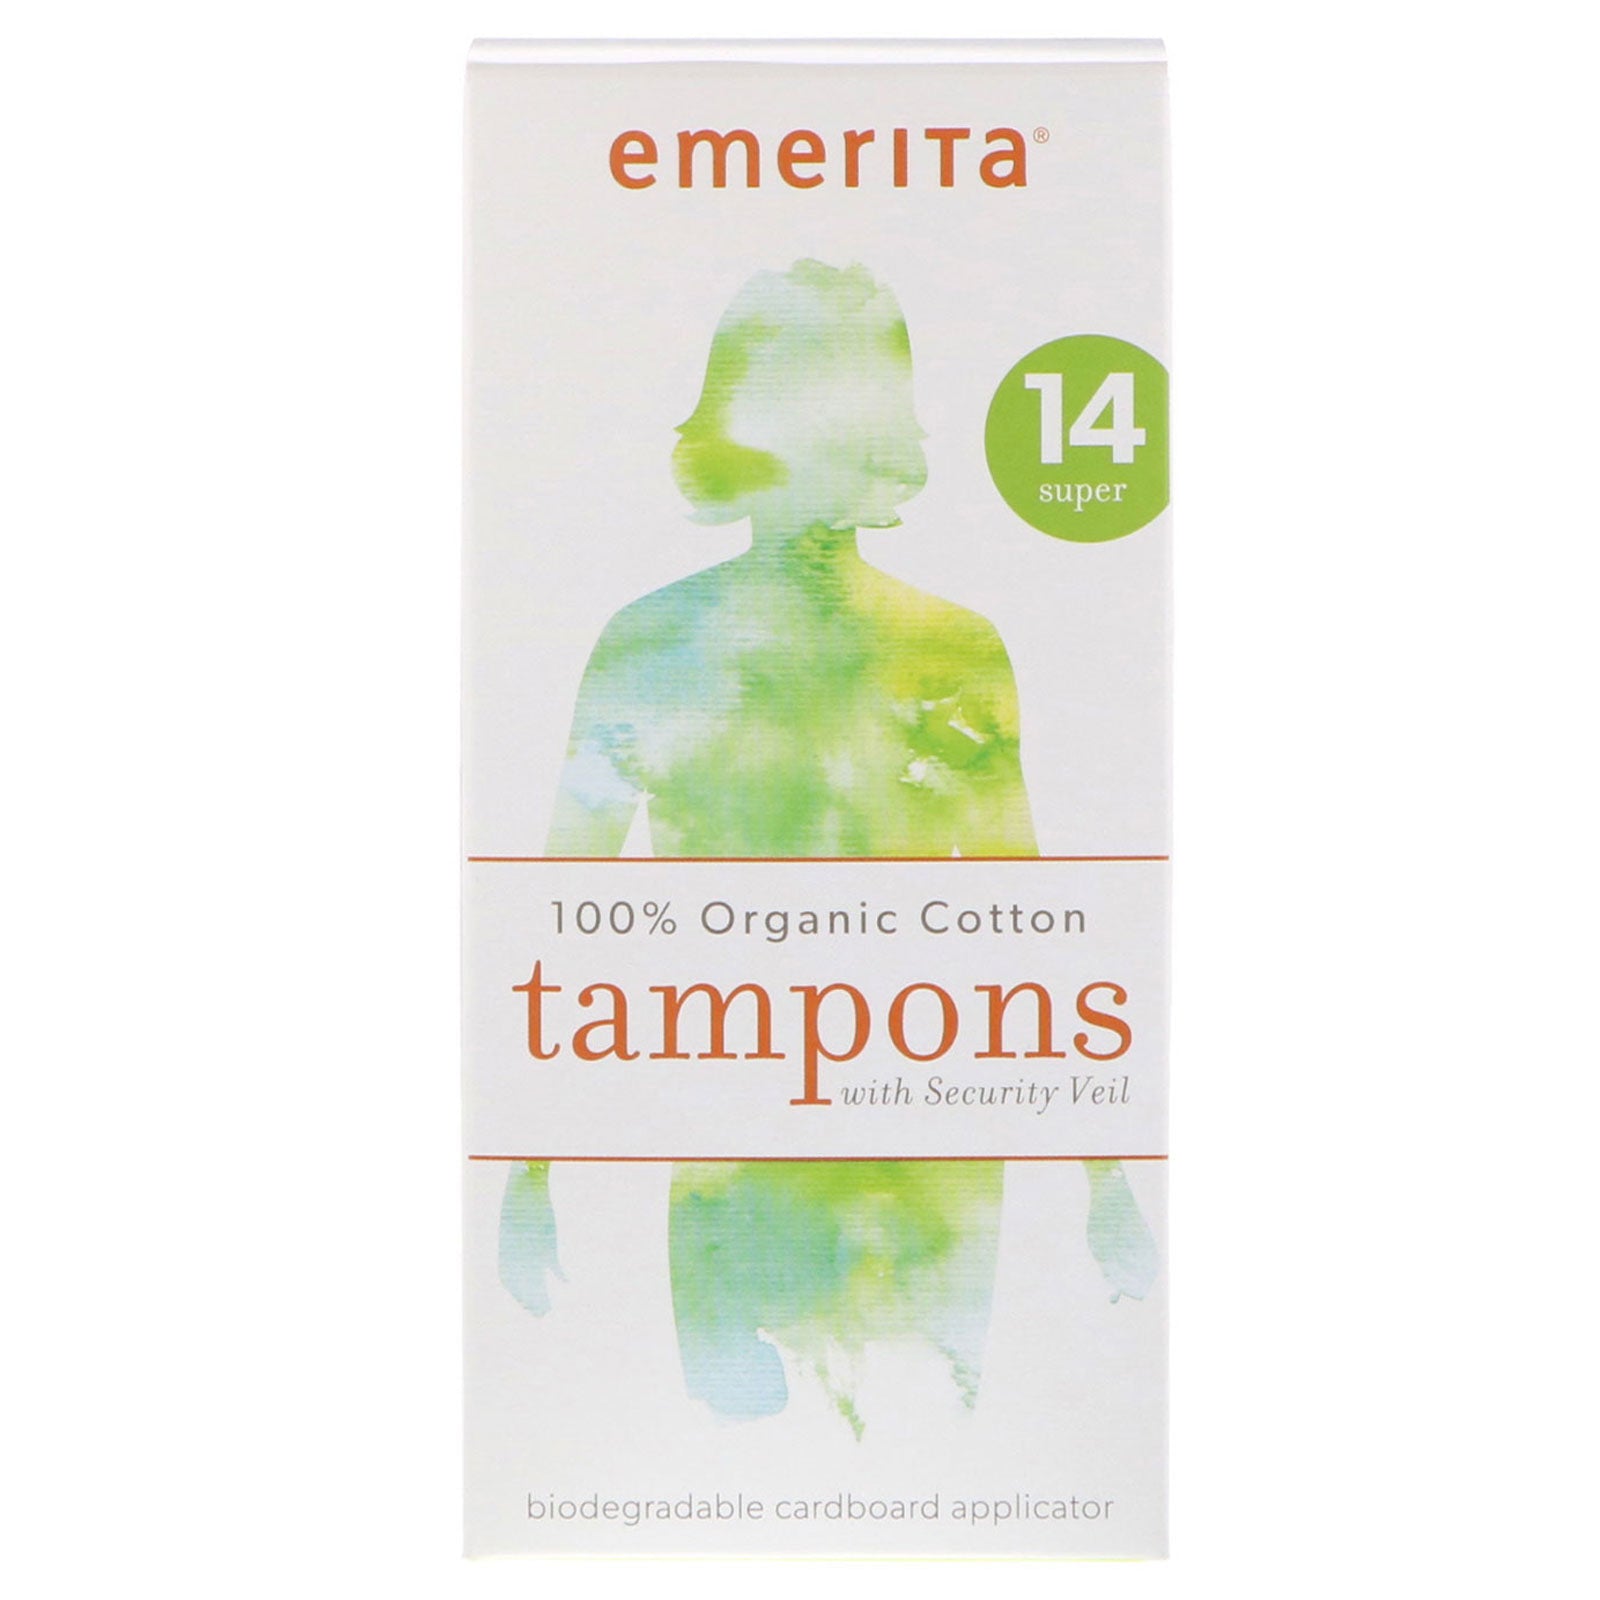 Emerita, 100% Organic Cotton Tampons with Security Veil, Super, 14 Tampons